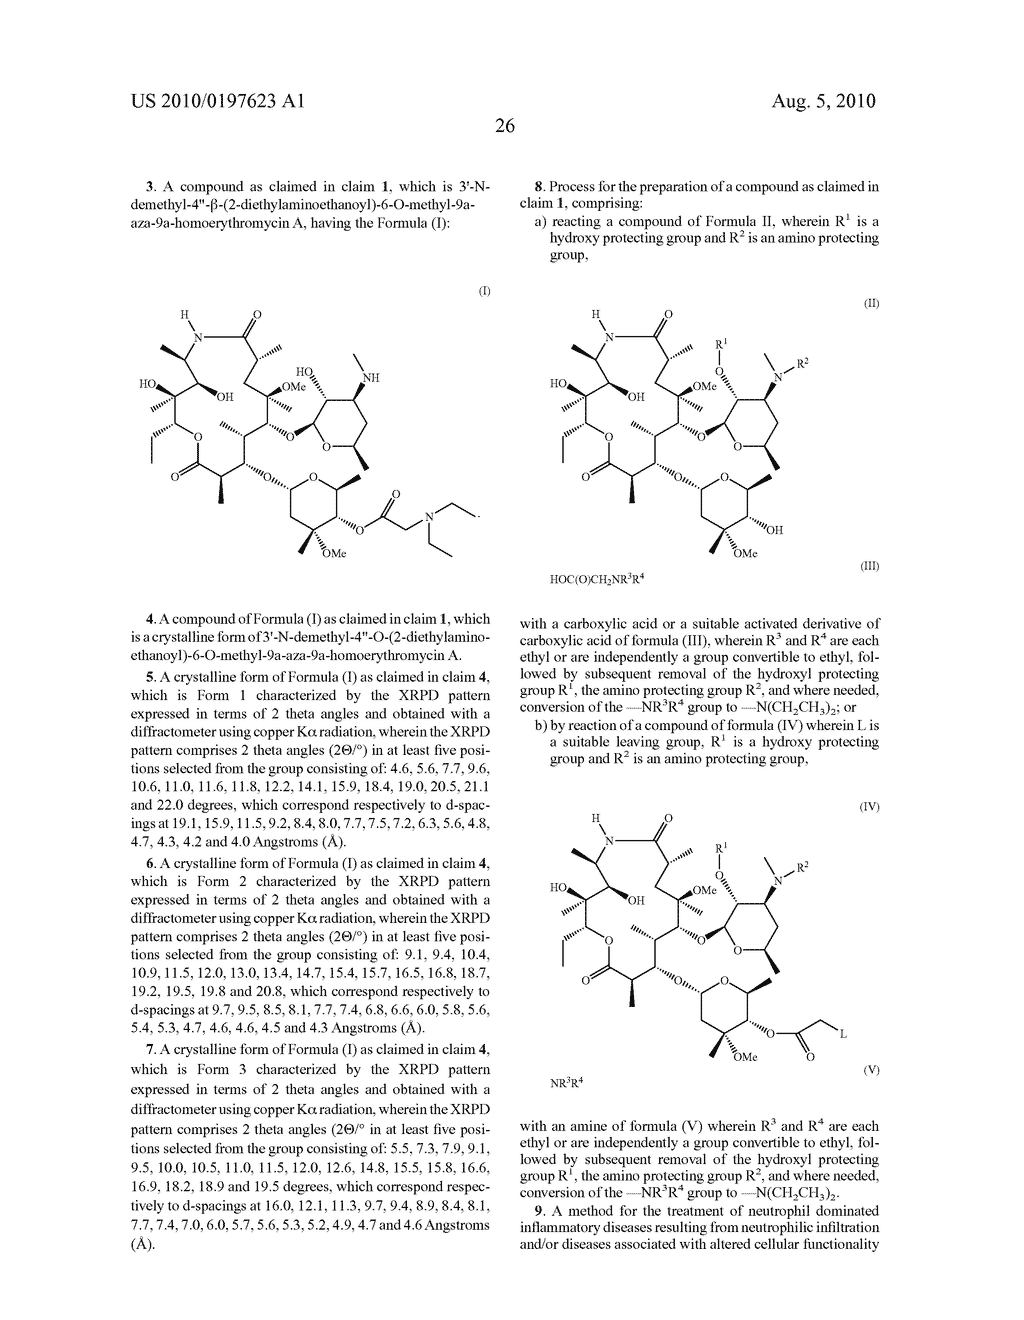 Anti-Infammatory Macrolide - diagram, schematic, and image 43